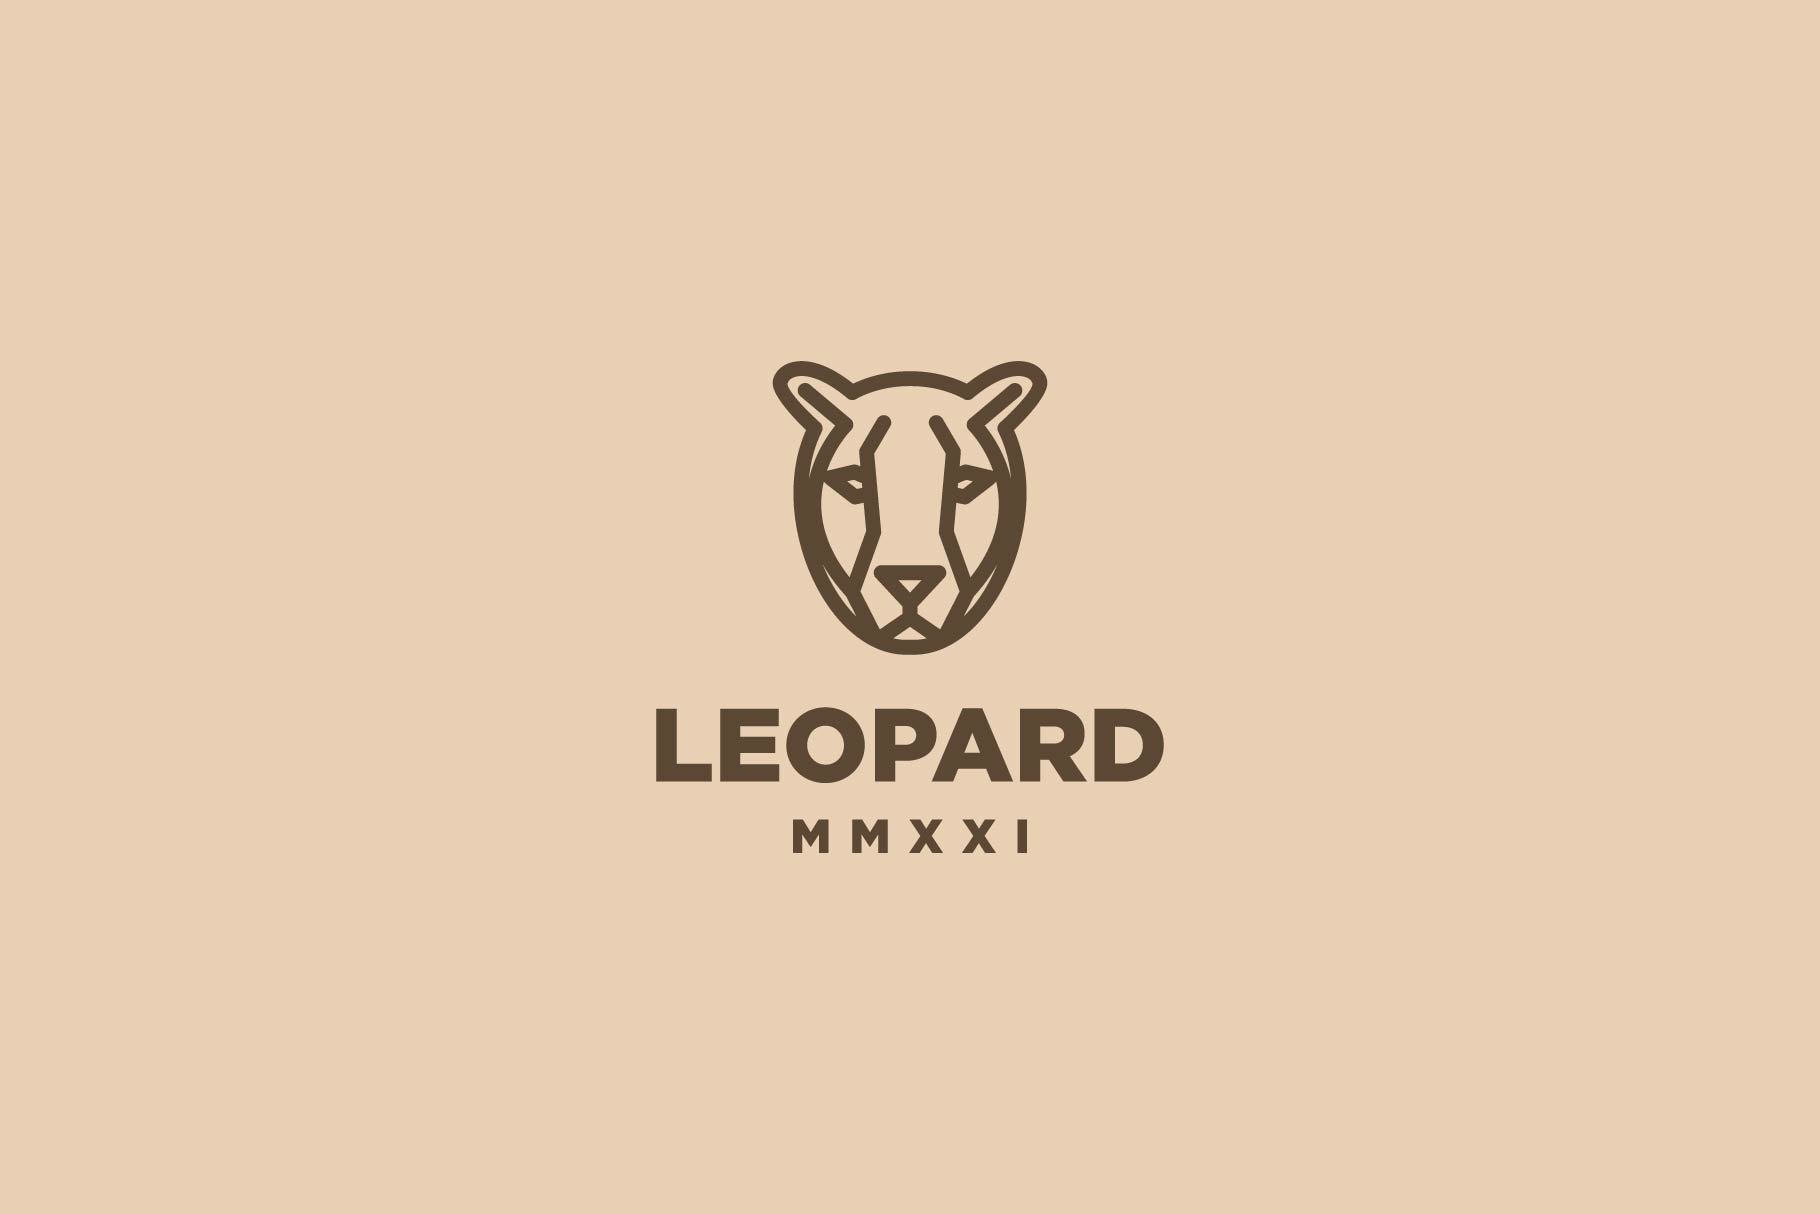 monoline leopard face logo cover image.